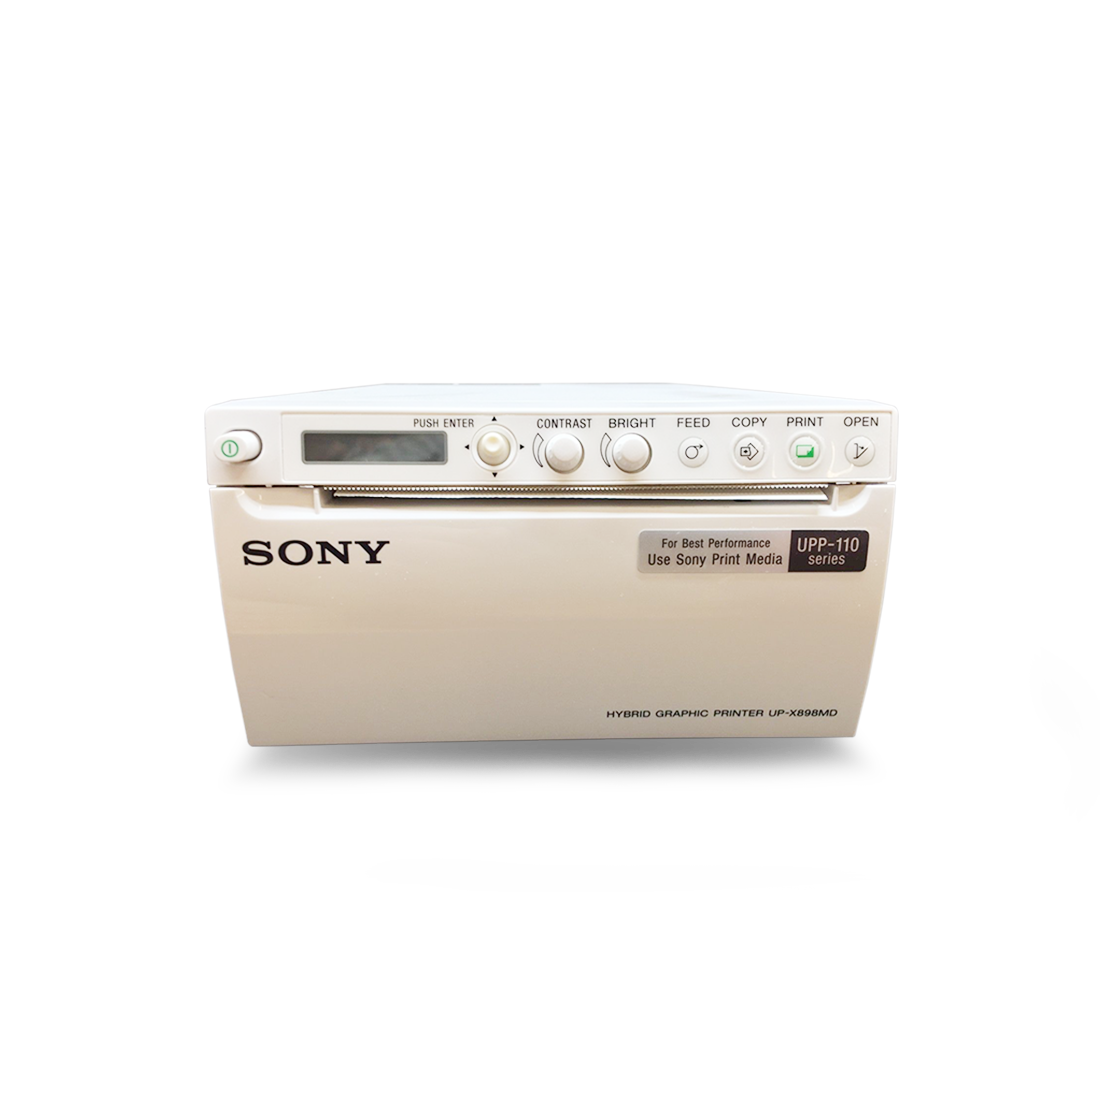 Sony UP-X898MD Video Printer